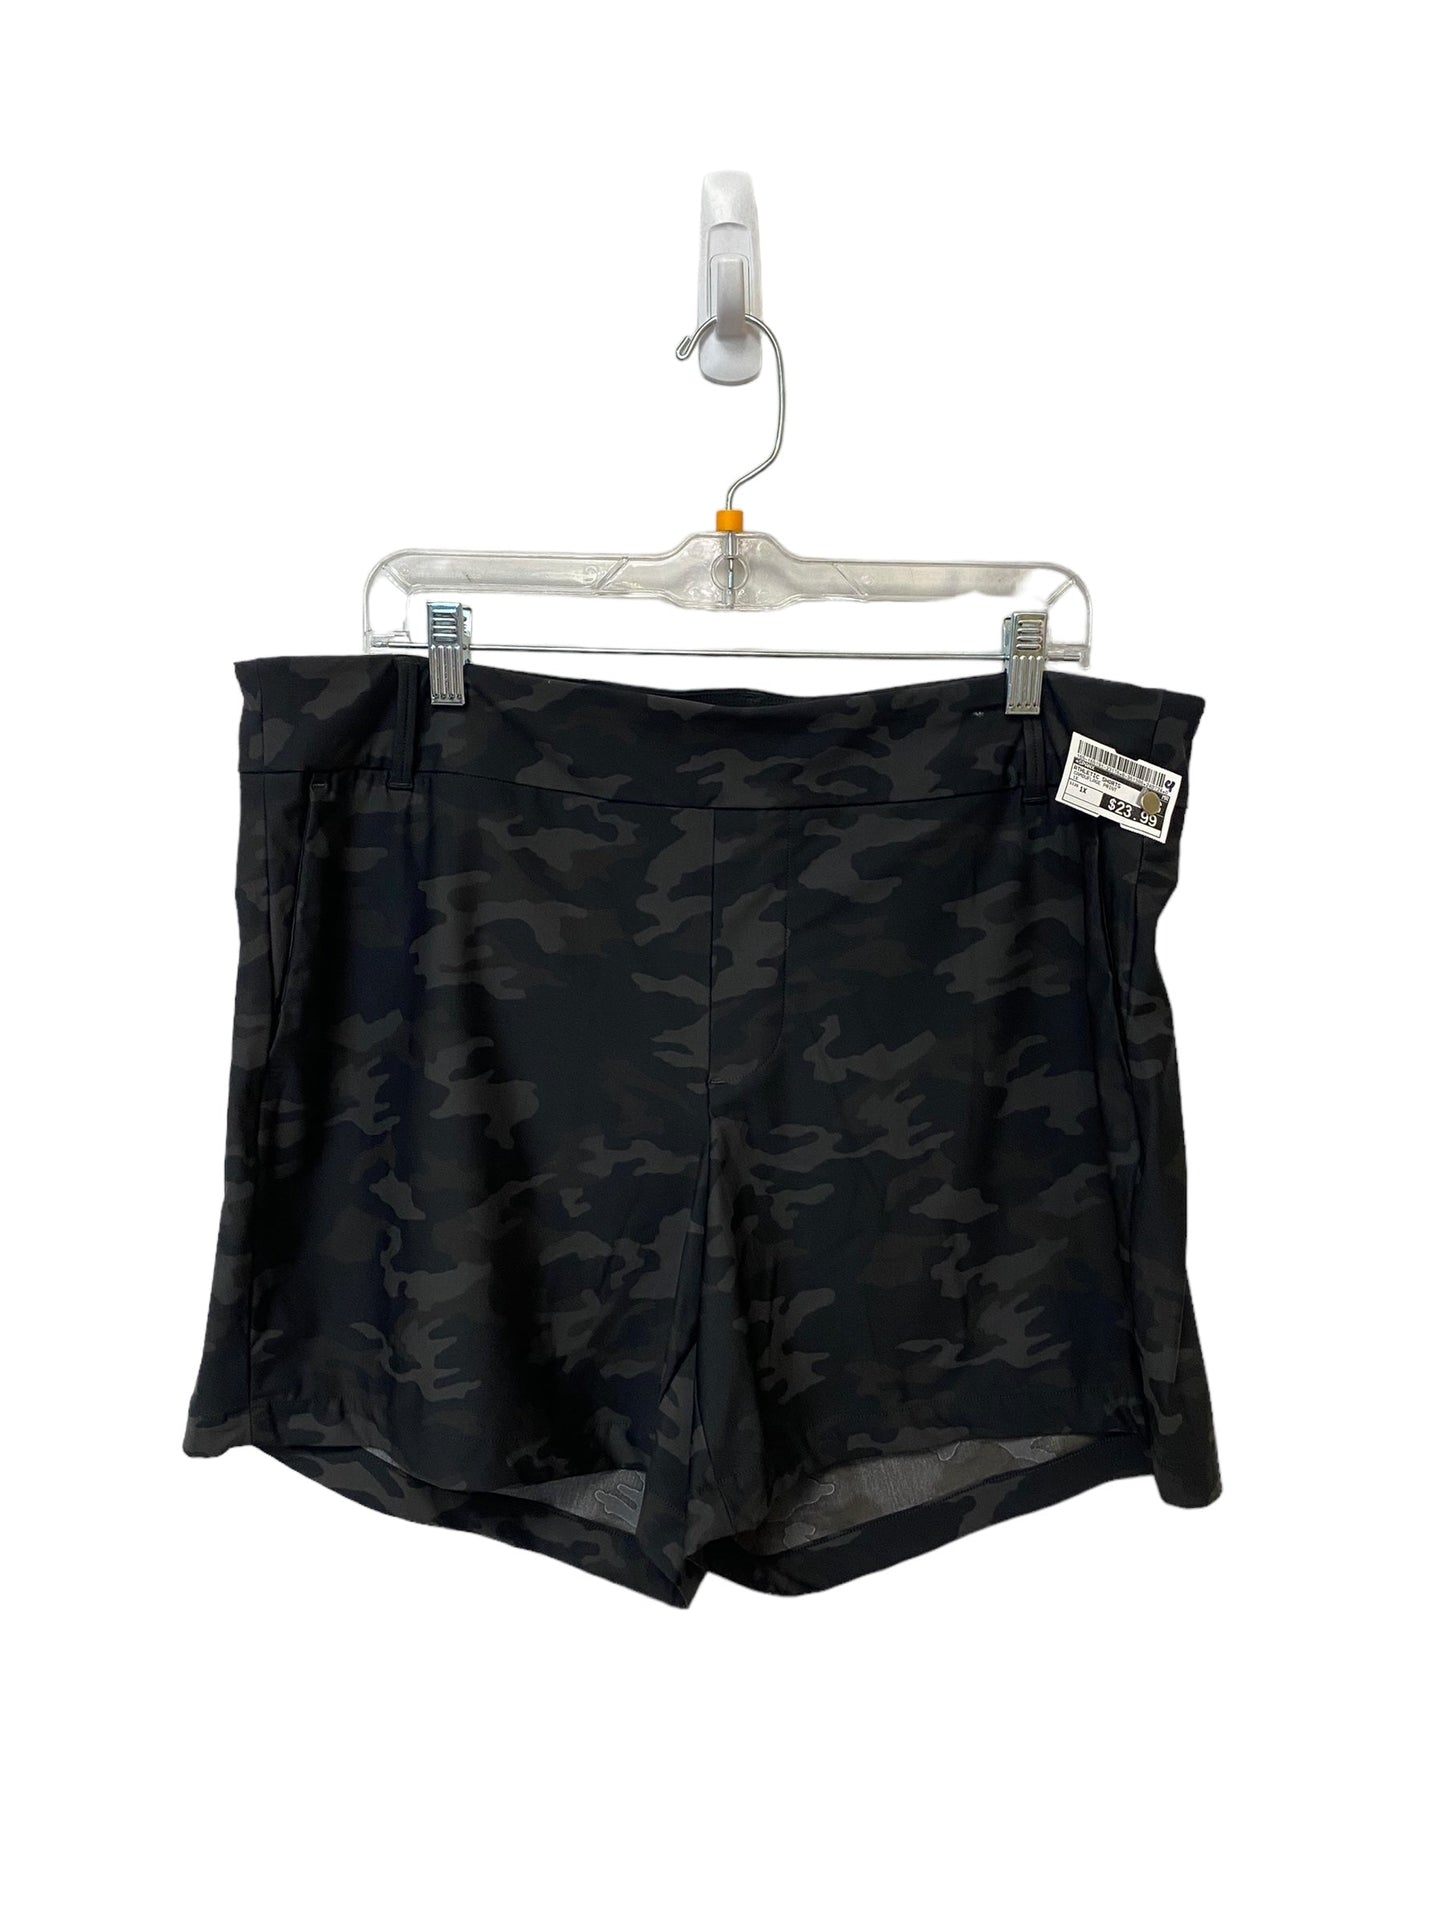 Camouflage Print Athletic Shorts Spanx, Size 1x